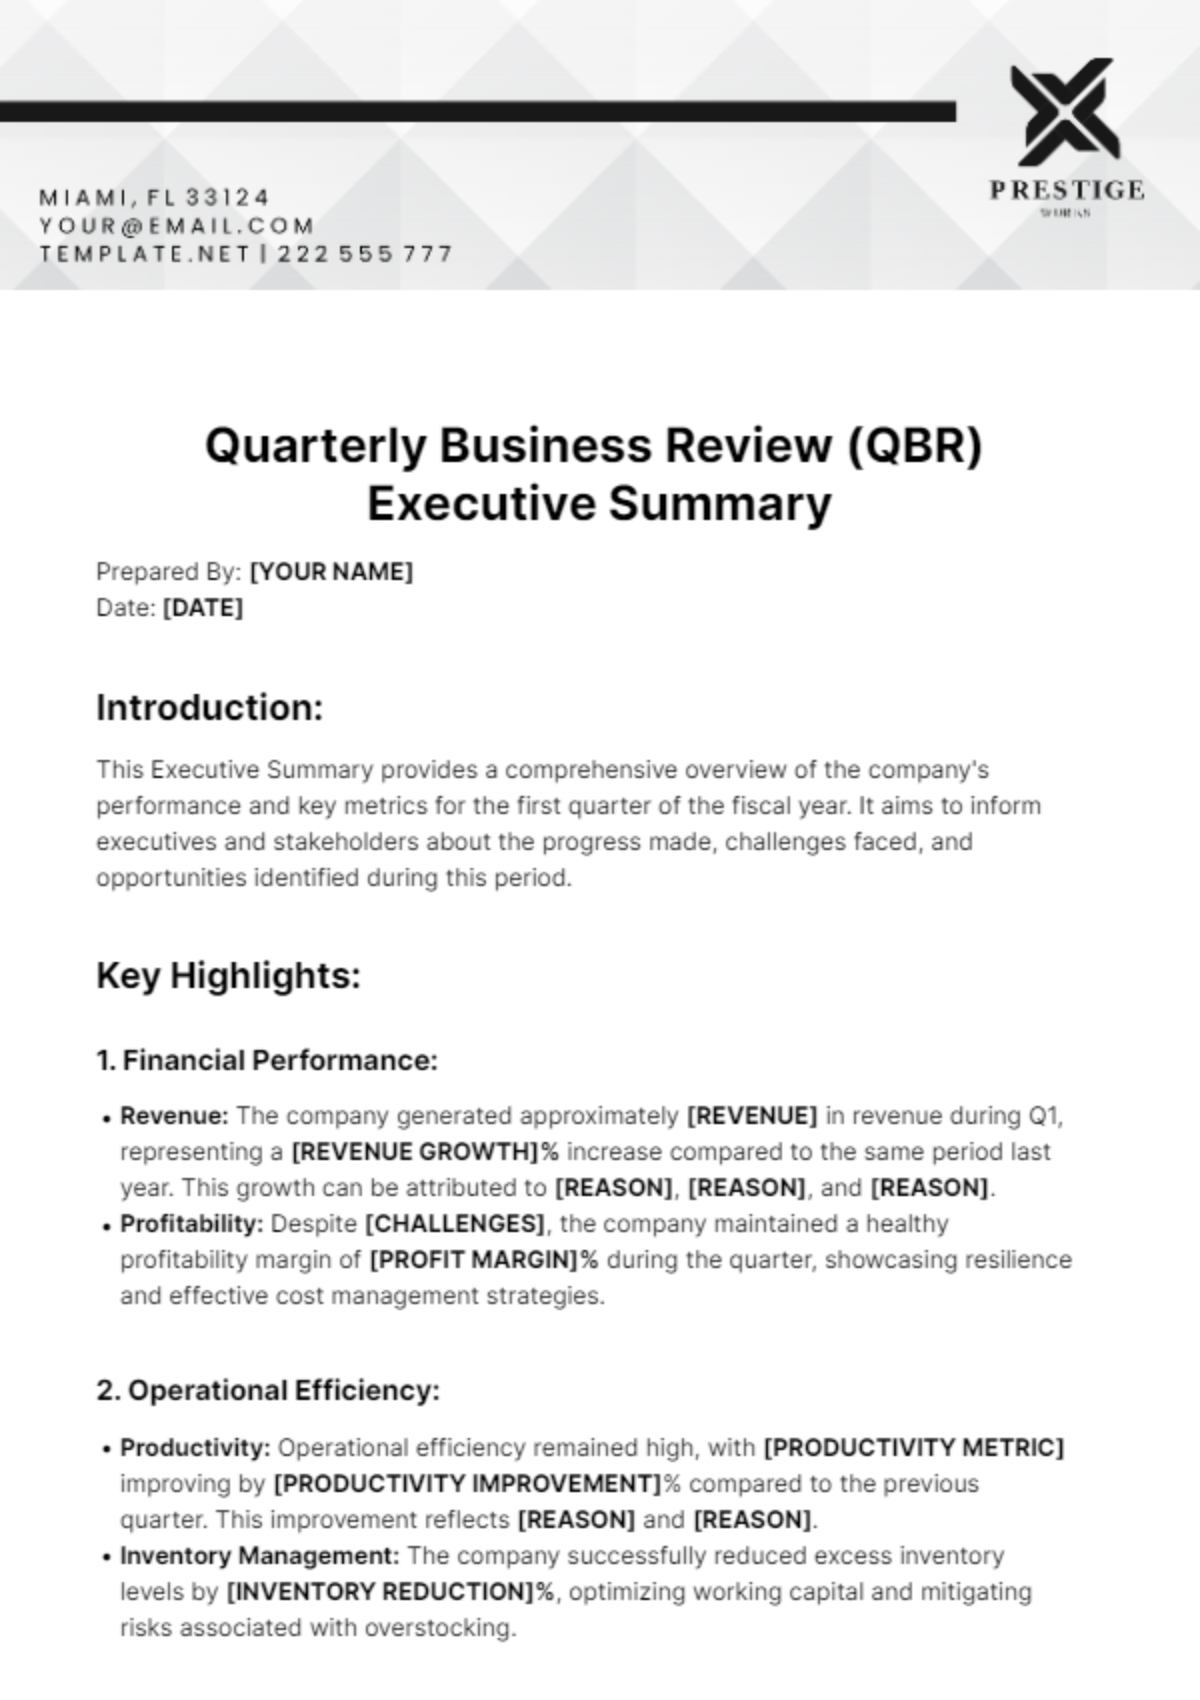 Quarterly Business Review Executive Summary Template